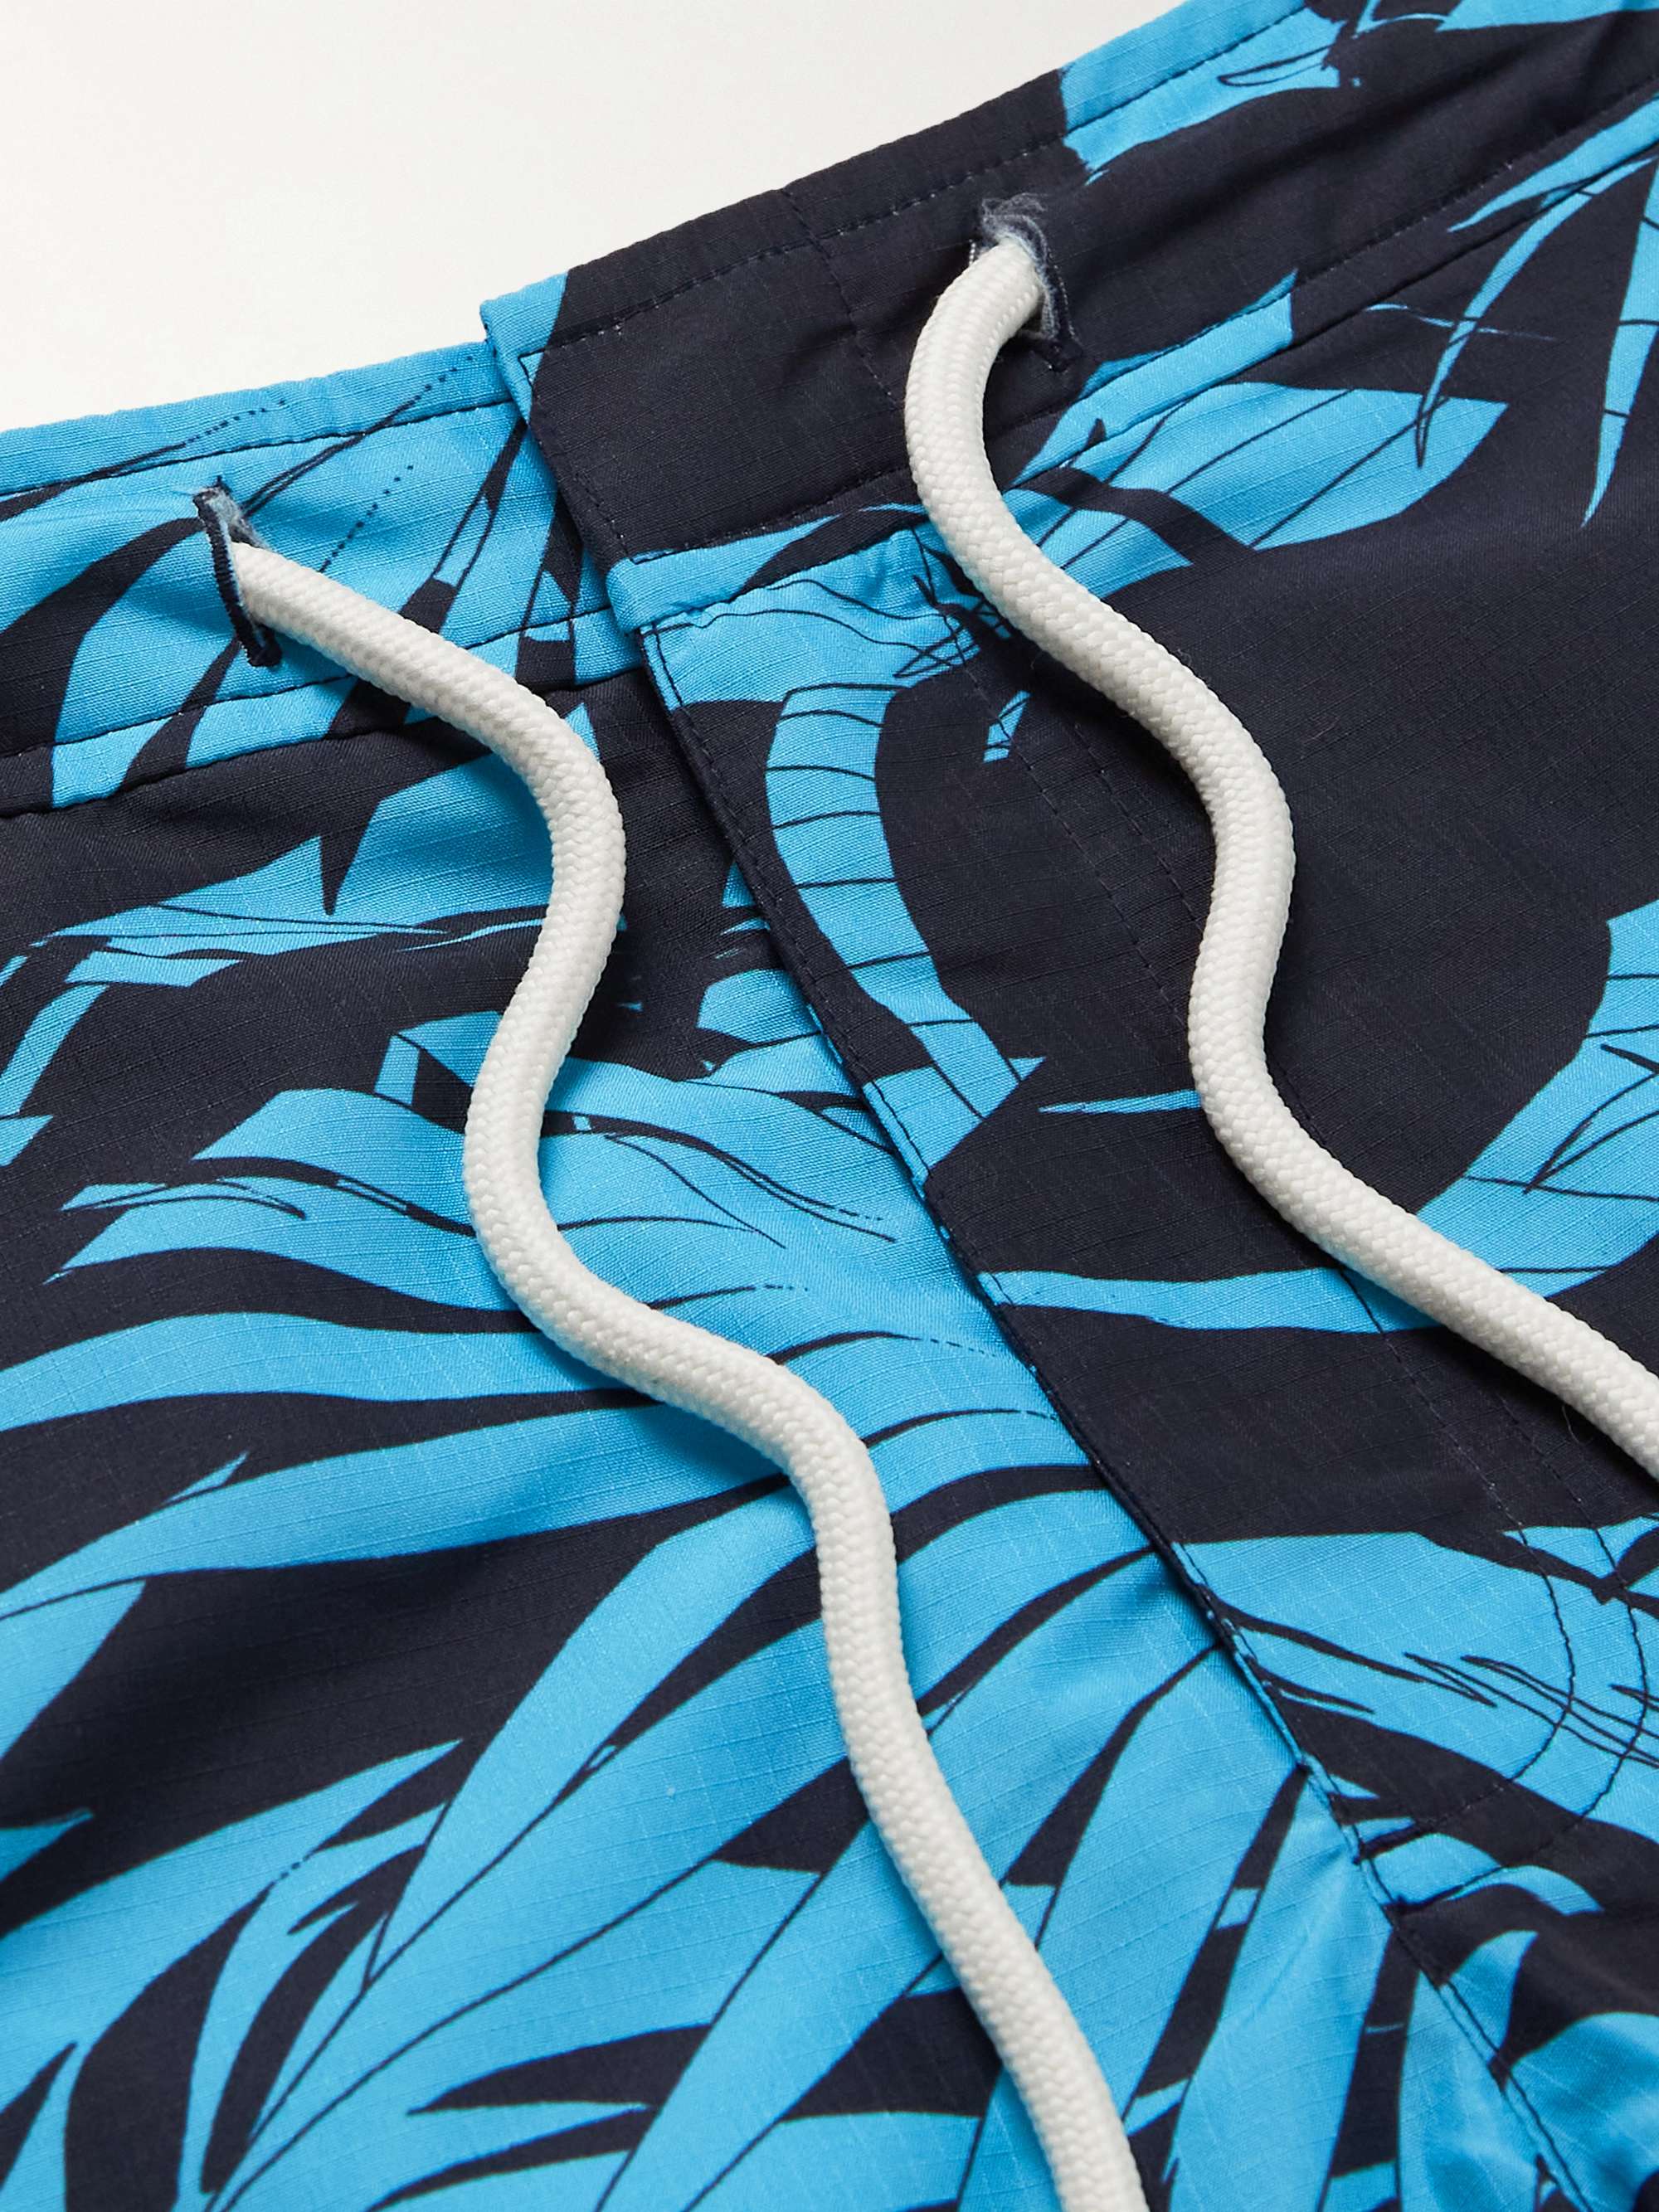 ORLEBAR BROWN Standard Mid-Length Printed Swim Shorts